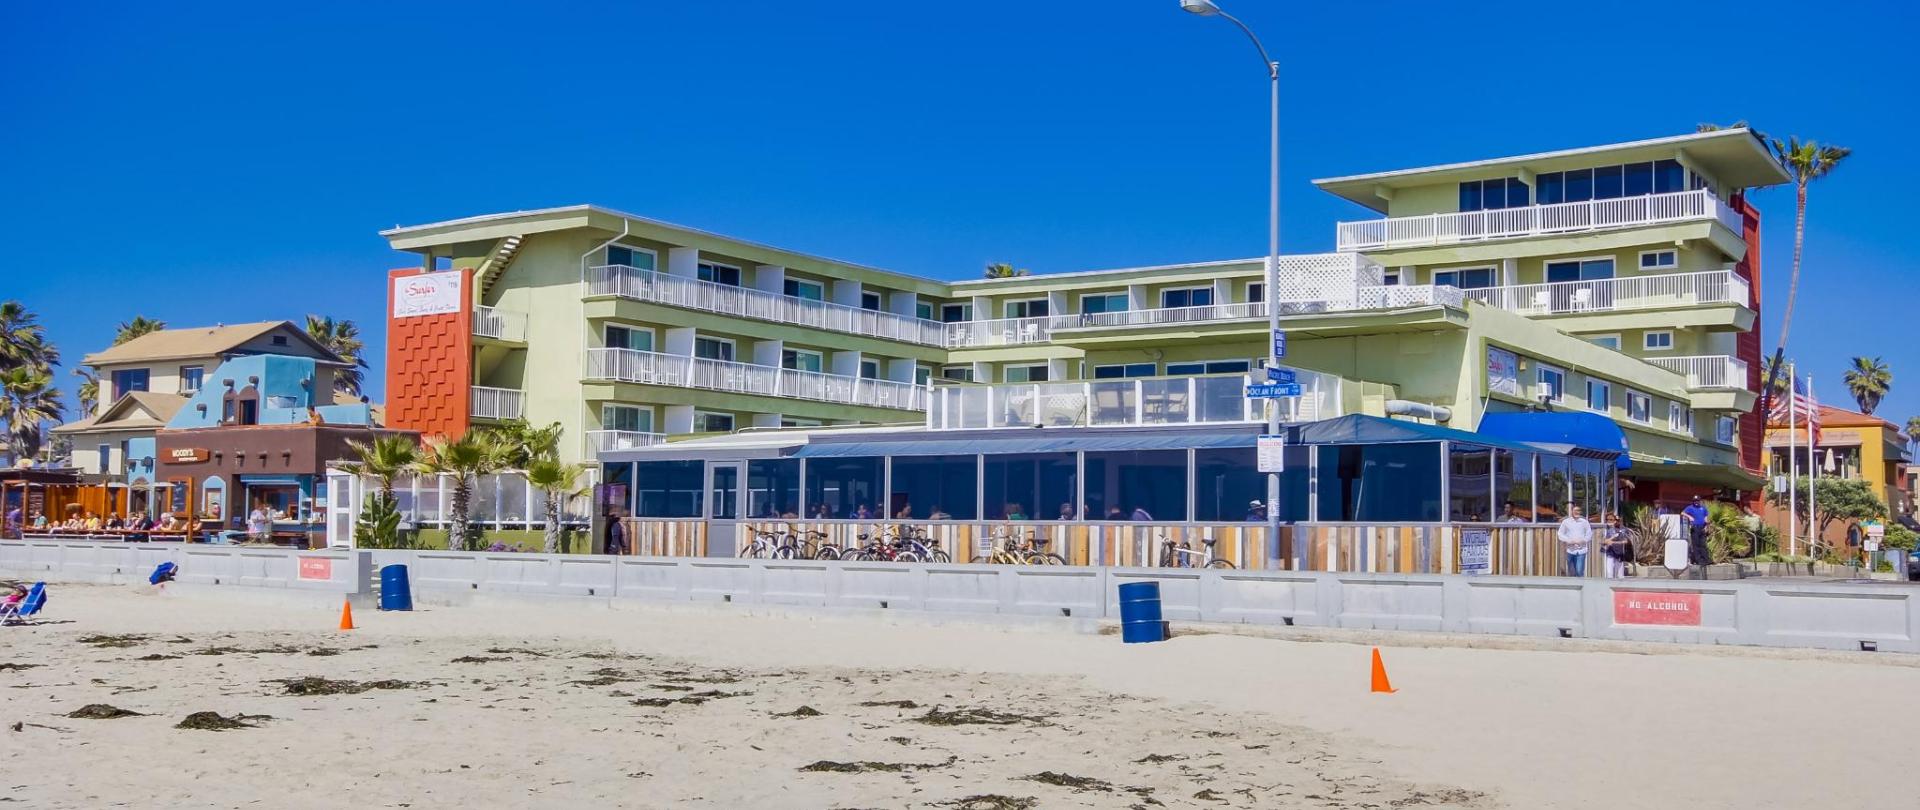 The Surfer Beach Hotel San Diego Ca